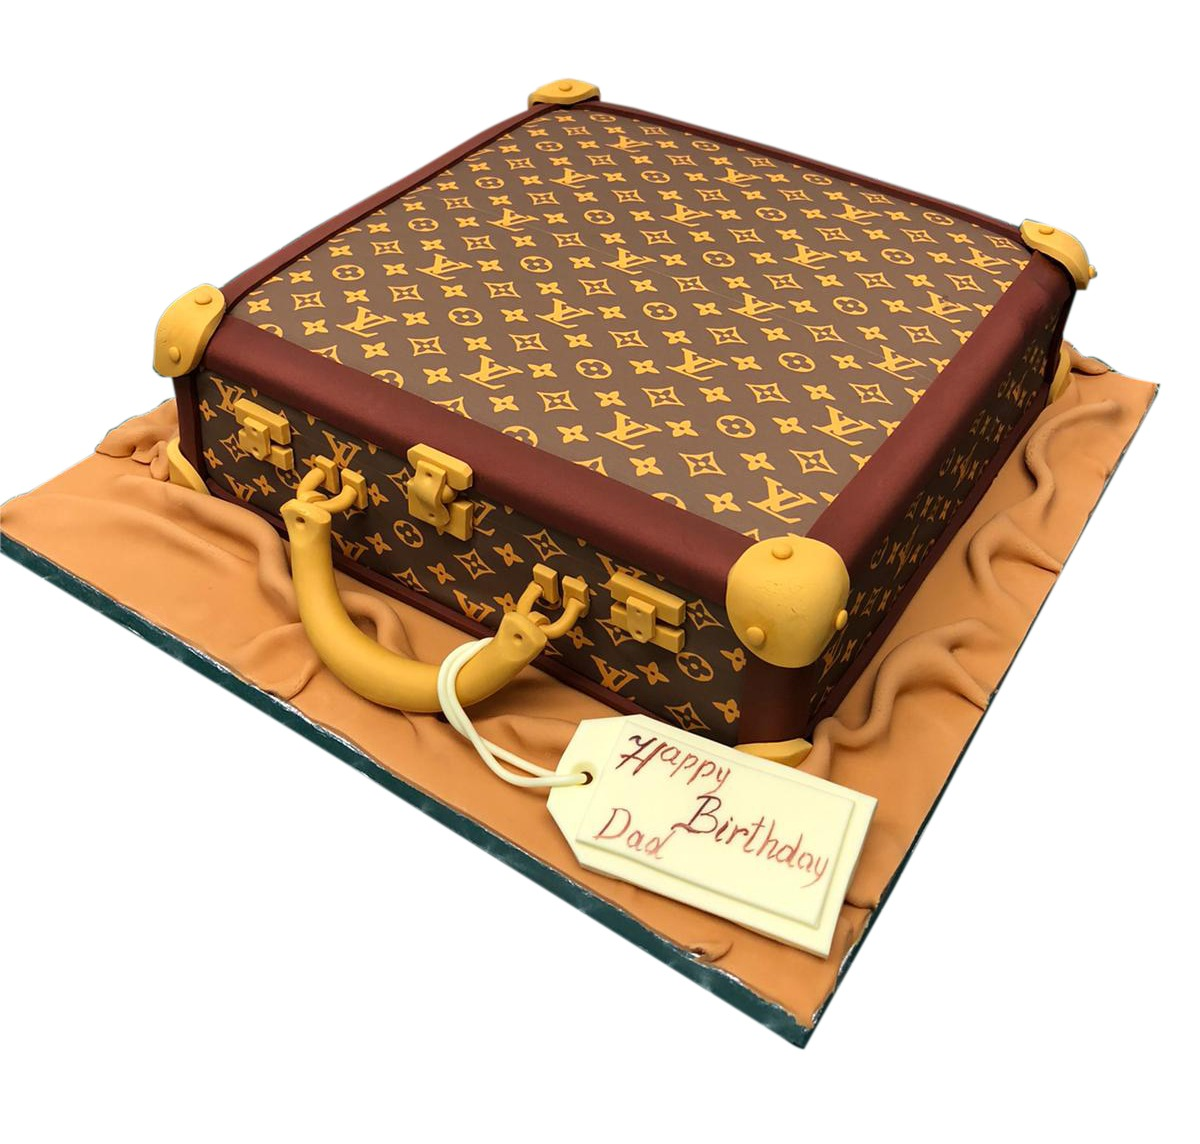 Cakes by Anitha: Louis Vuitton Purse cake